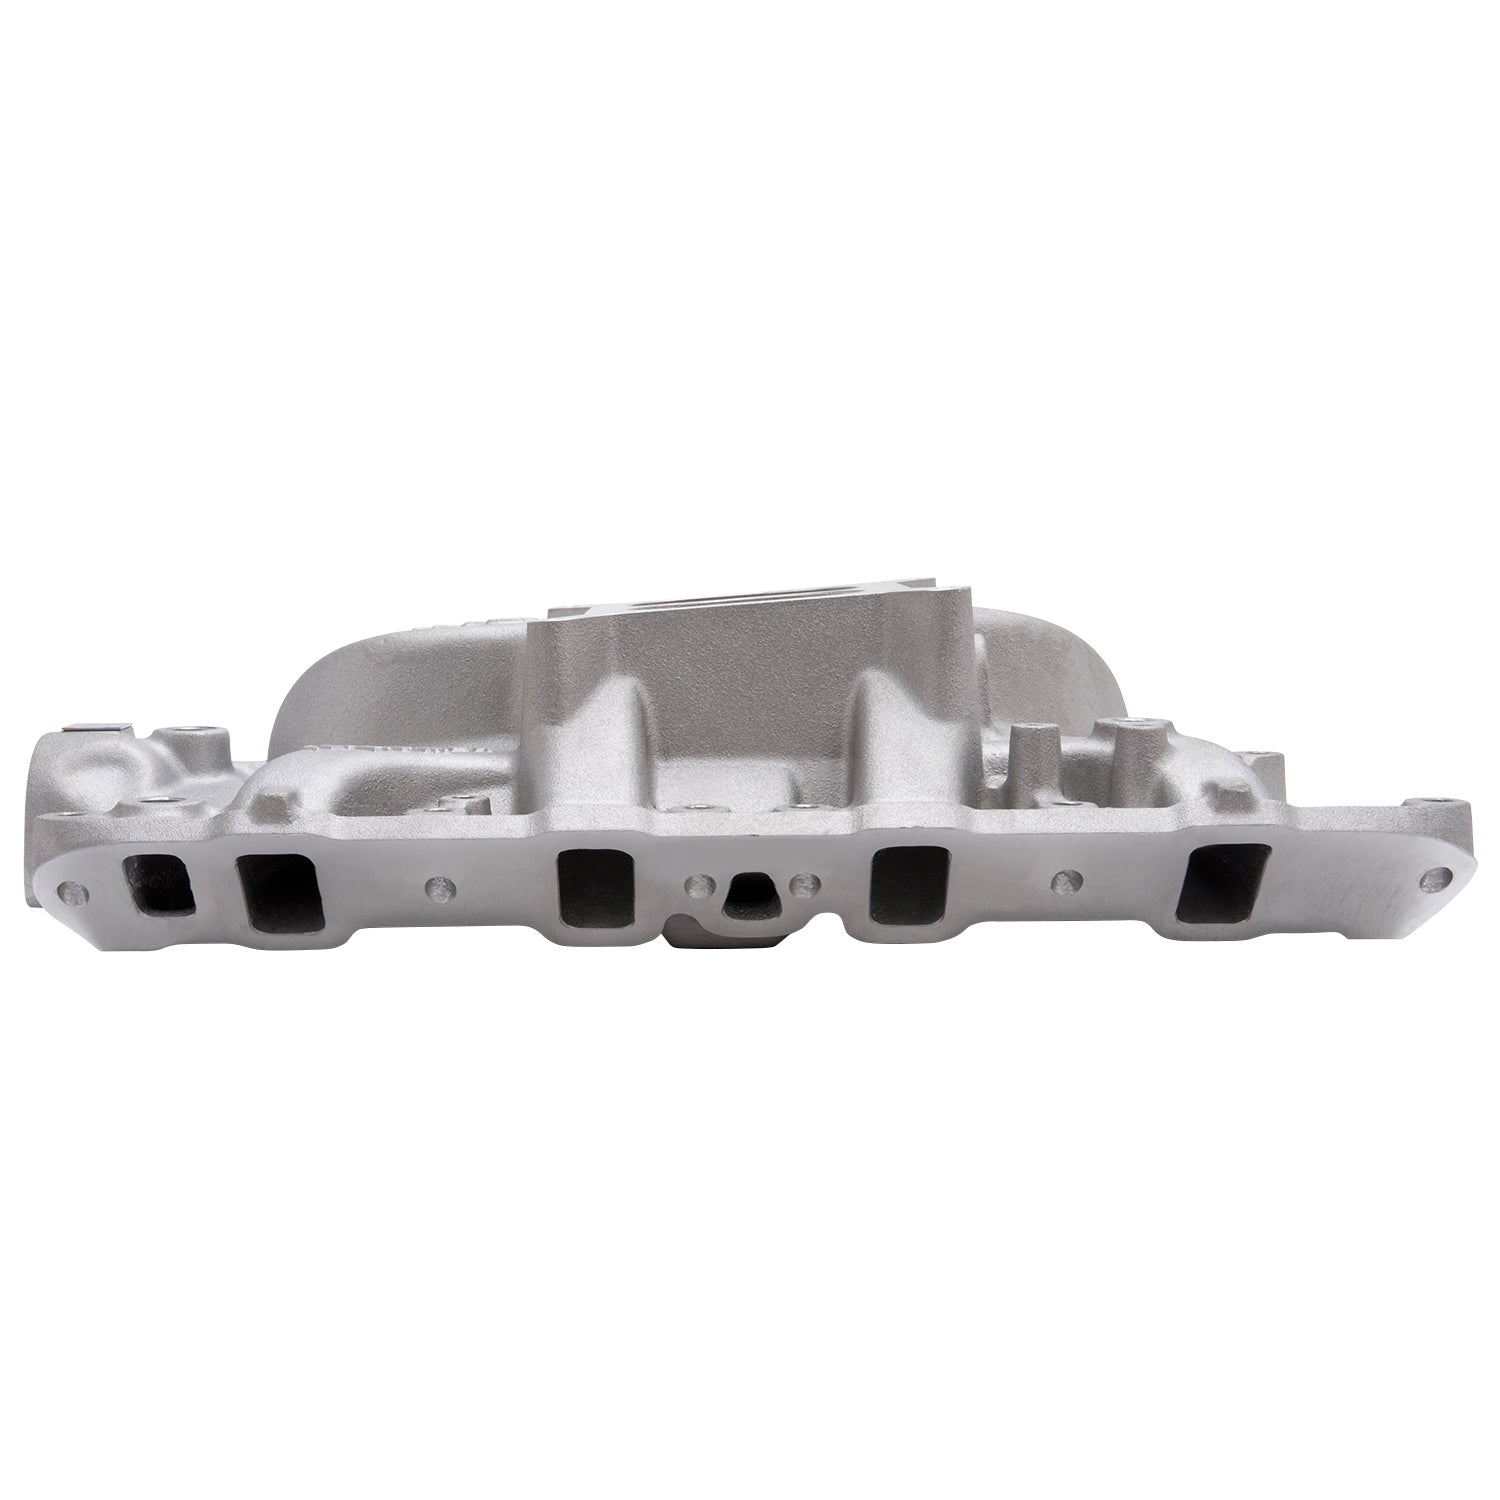 Edelbrock Performer RPM 302 Intake Manifold for Ford 289-347 Small-Block V8